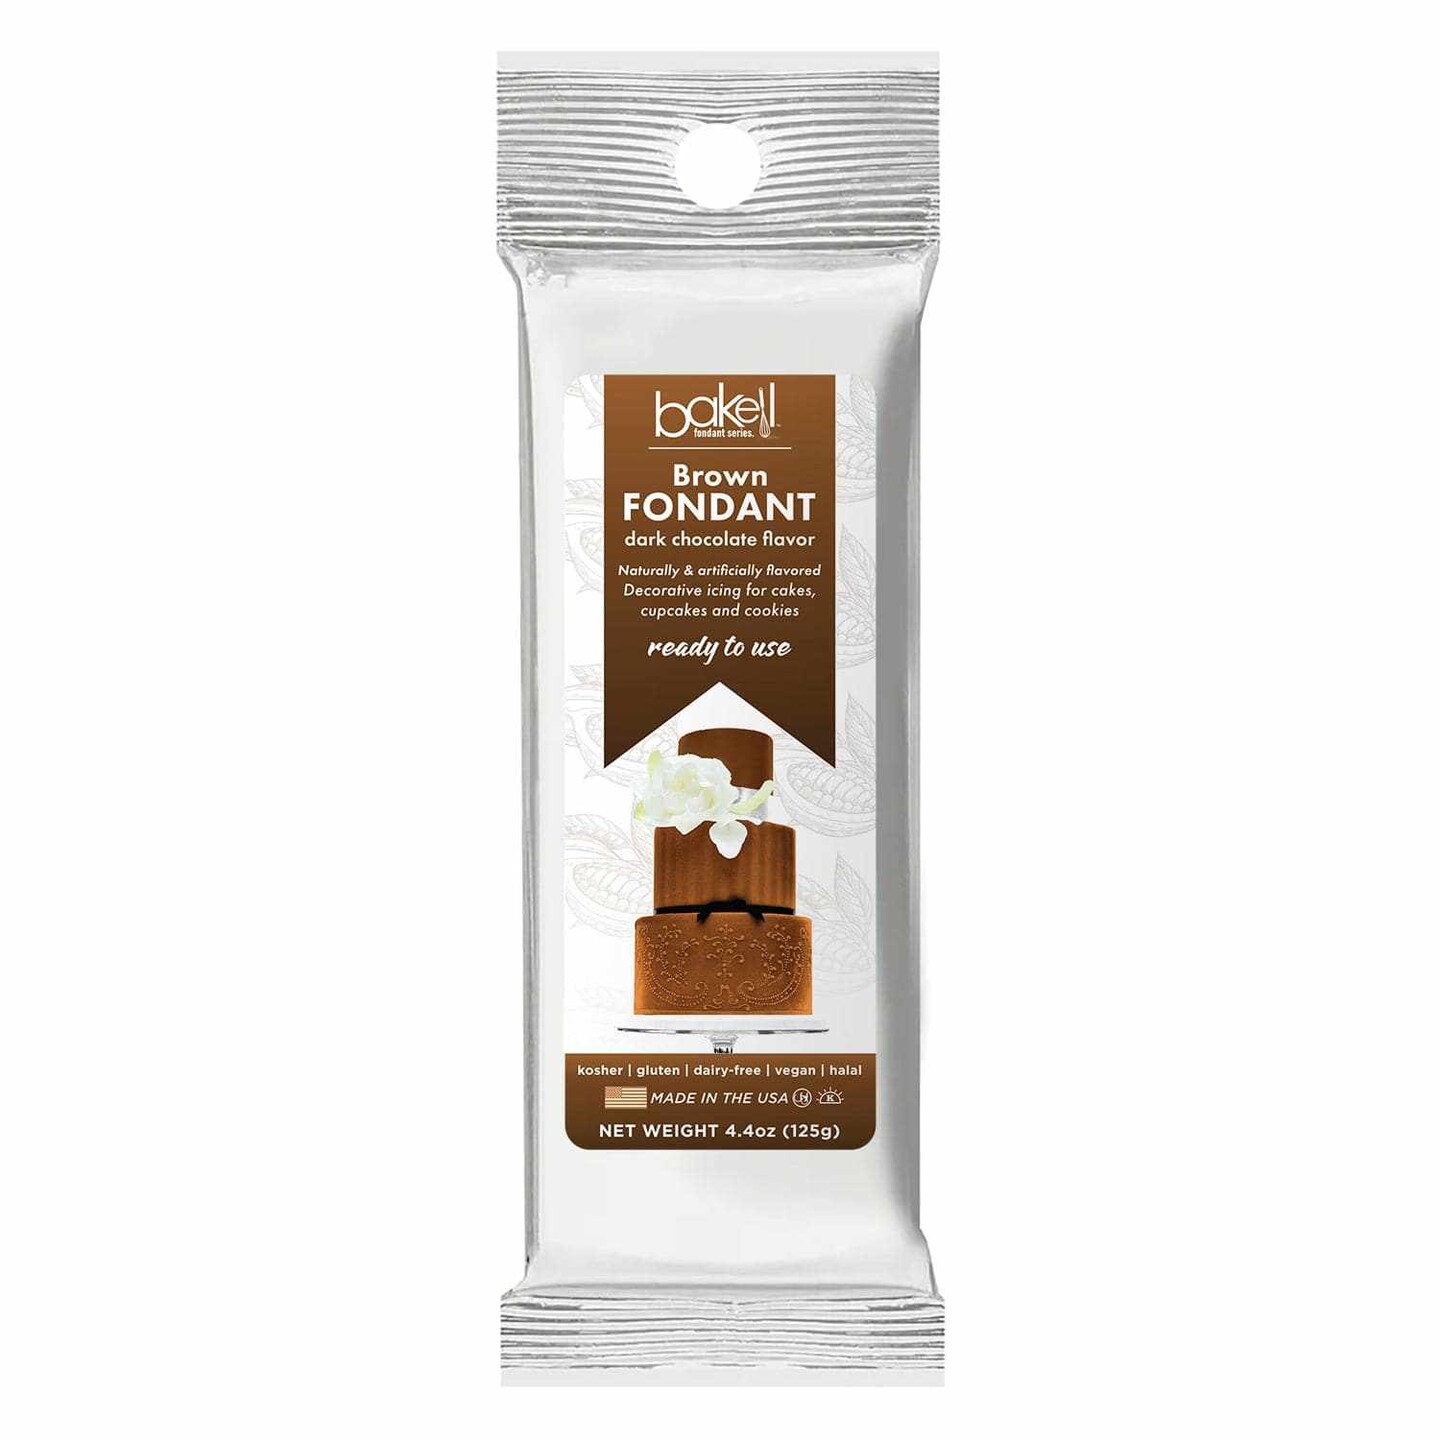 Brown Dark Chocolate Fondant